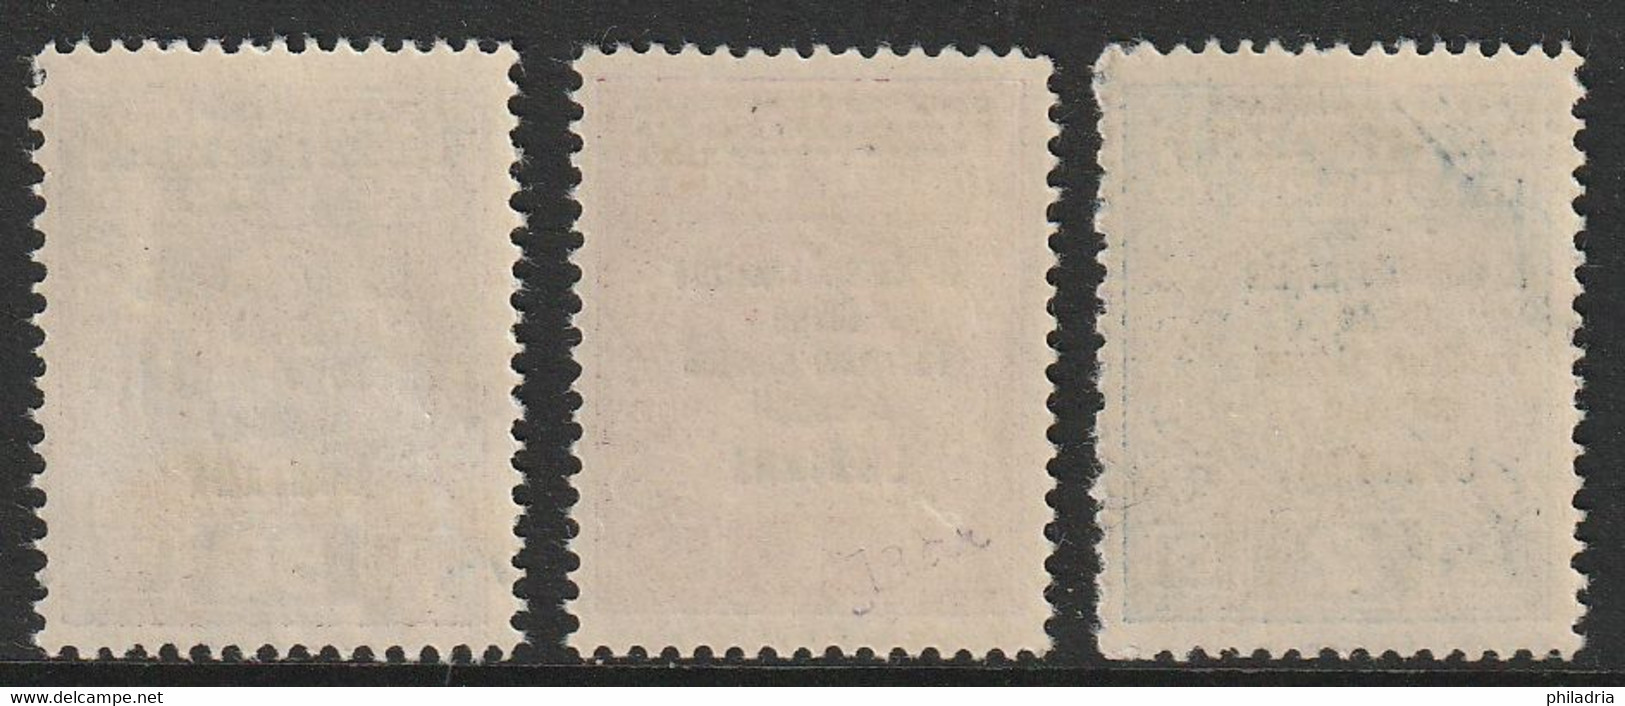 Lubiana, Ljubljana, 1941, Postage Due, R. Comm. Overprint, Modificated, Complete Set, MNH, Good Quality - Ljubljana